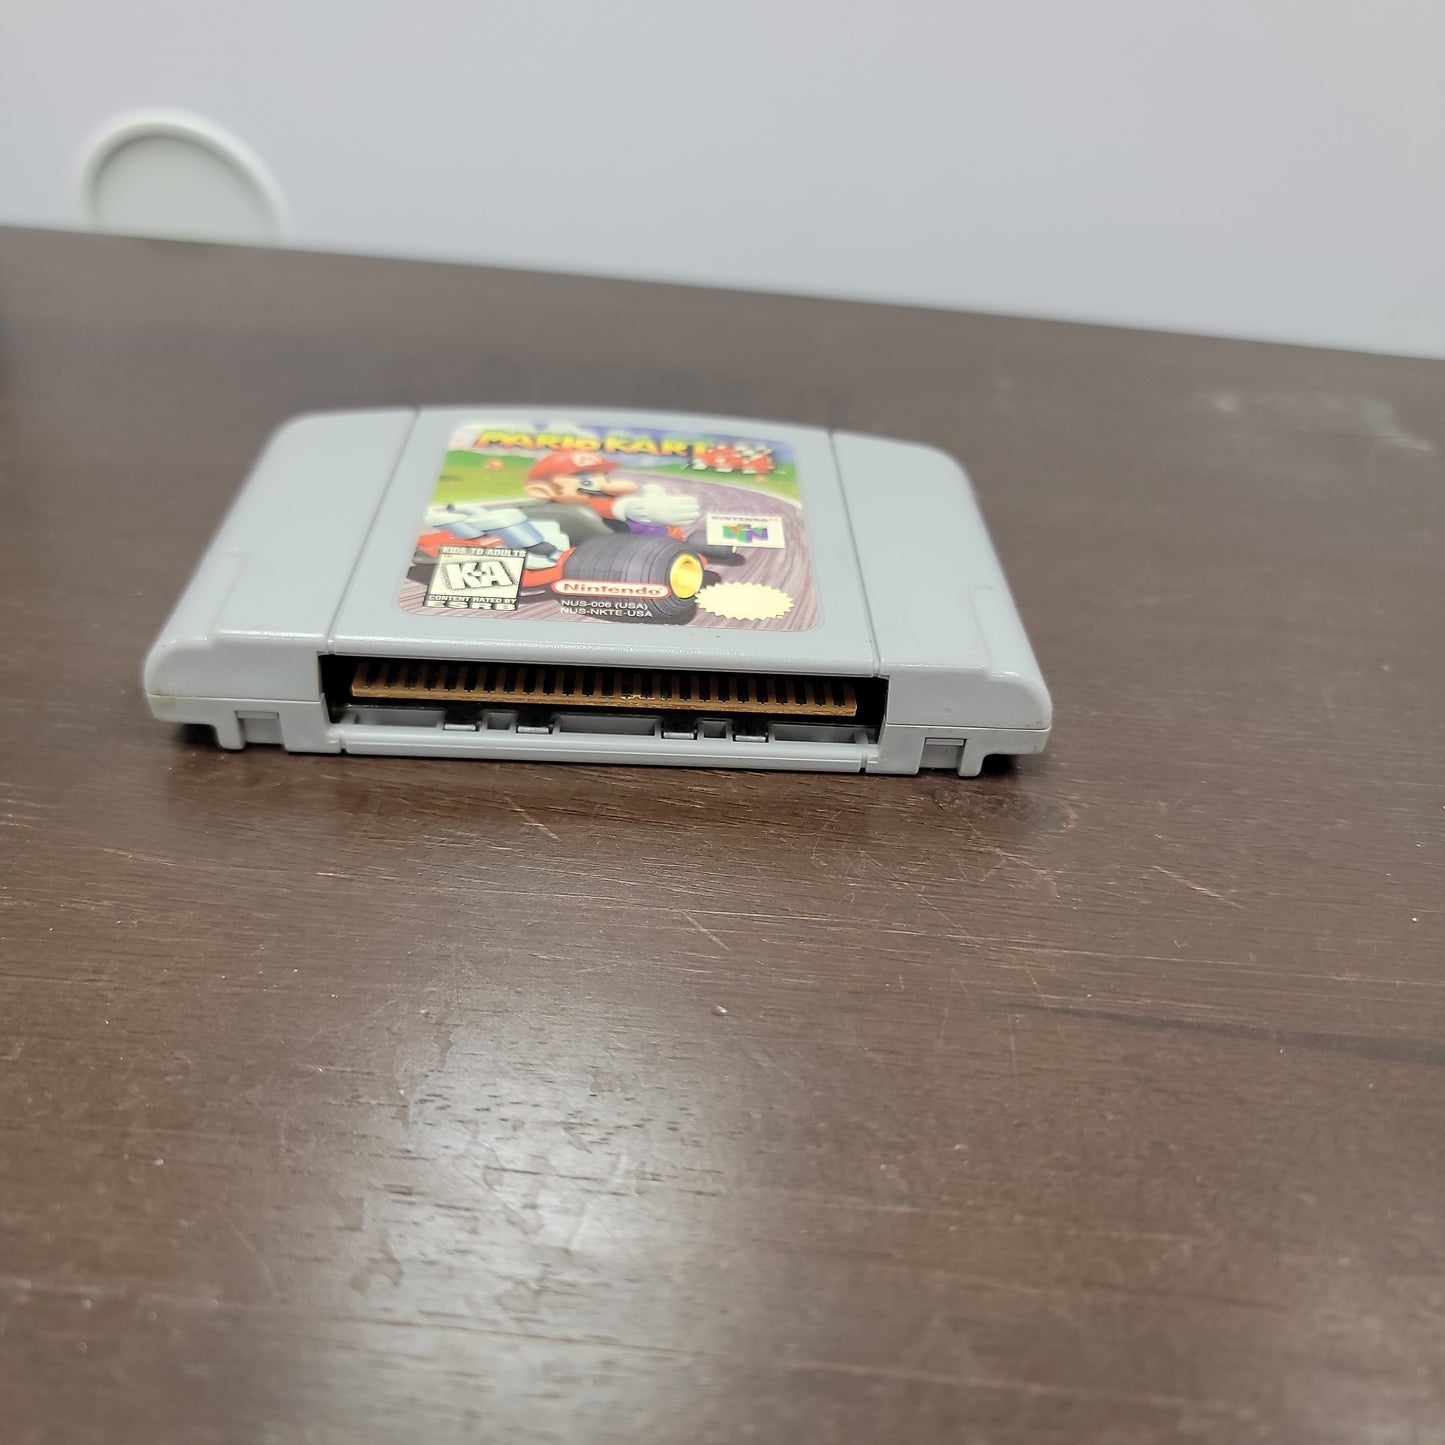 Mario Kart 64 Nintendo 64 Game